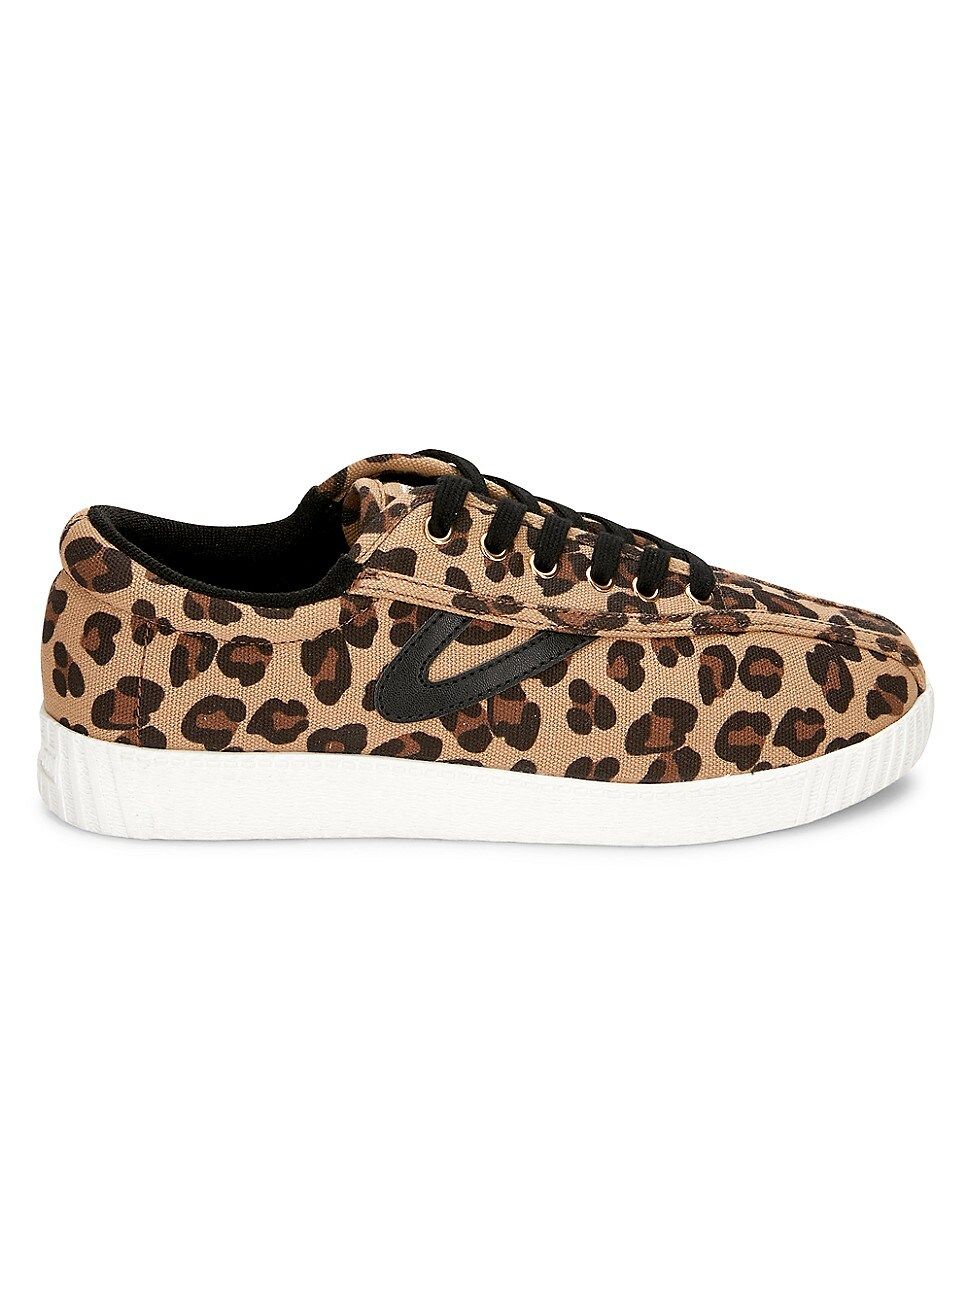 Nylite Plus Leopard Sneakers | Saks Fifth Avenue